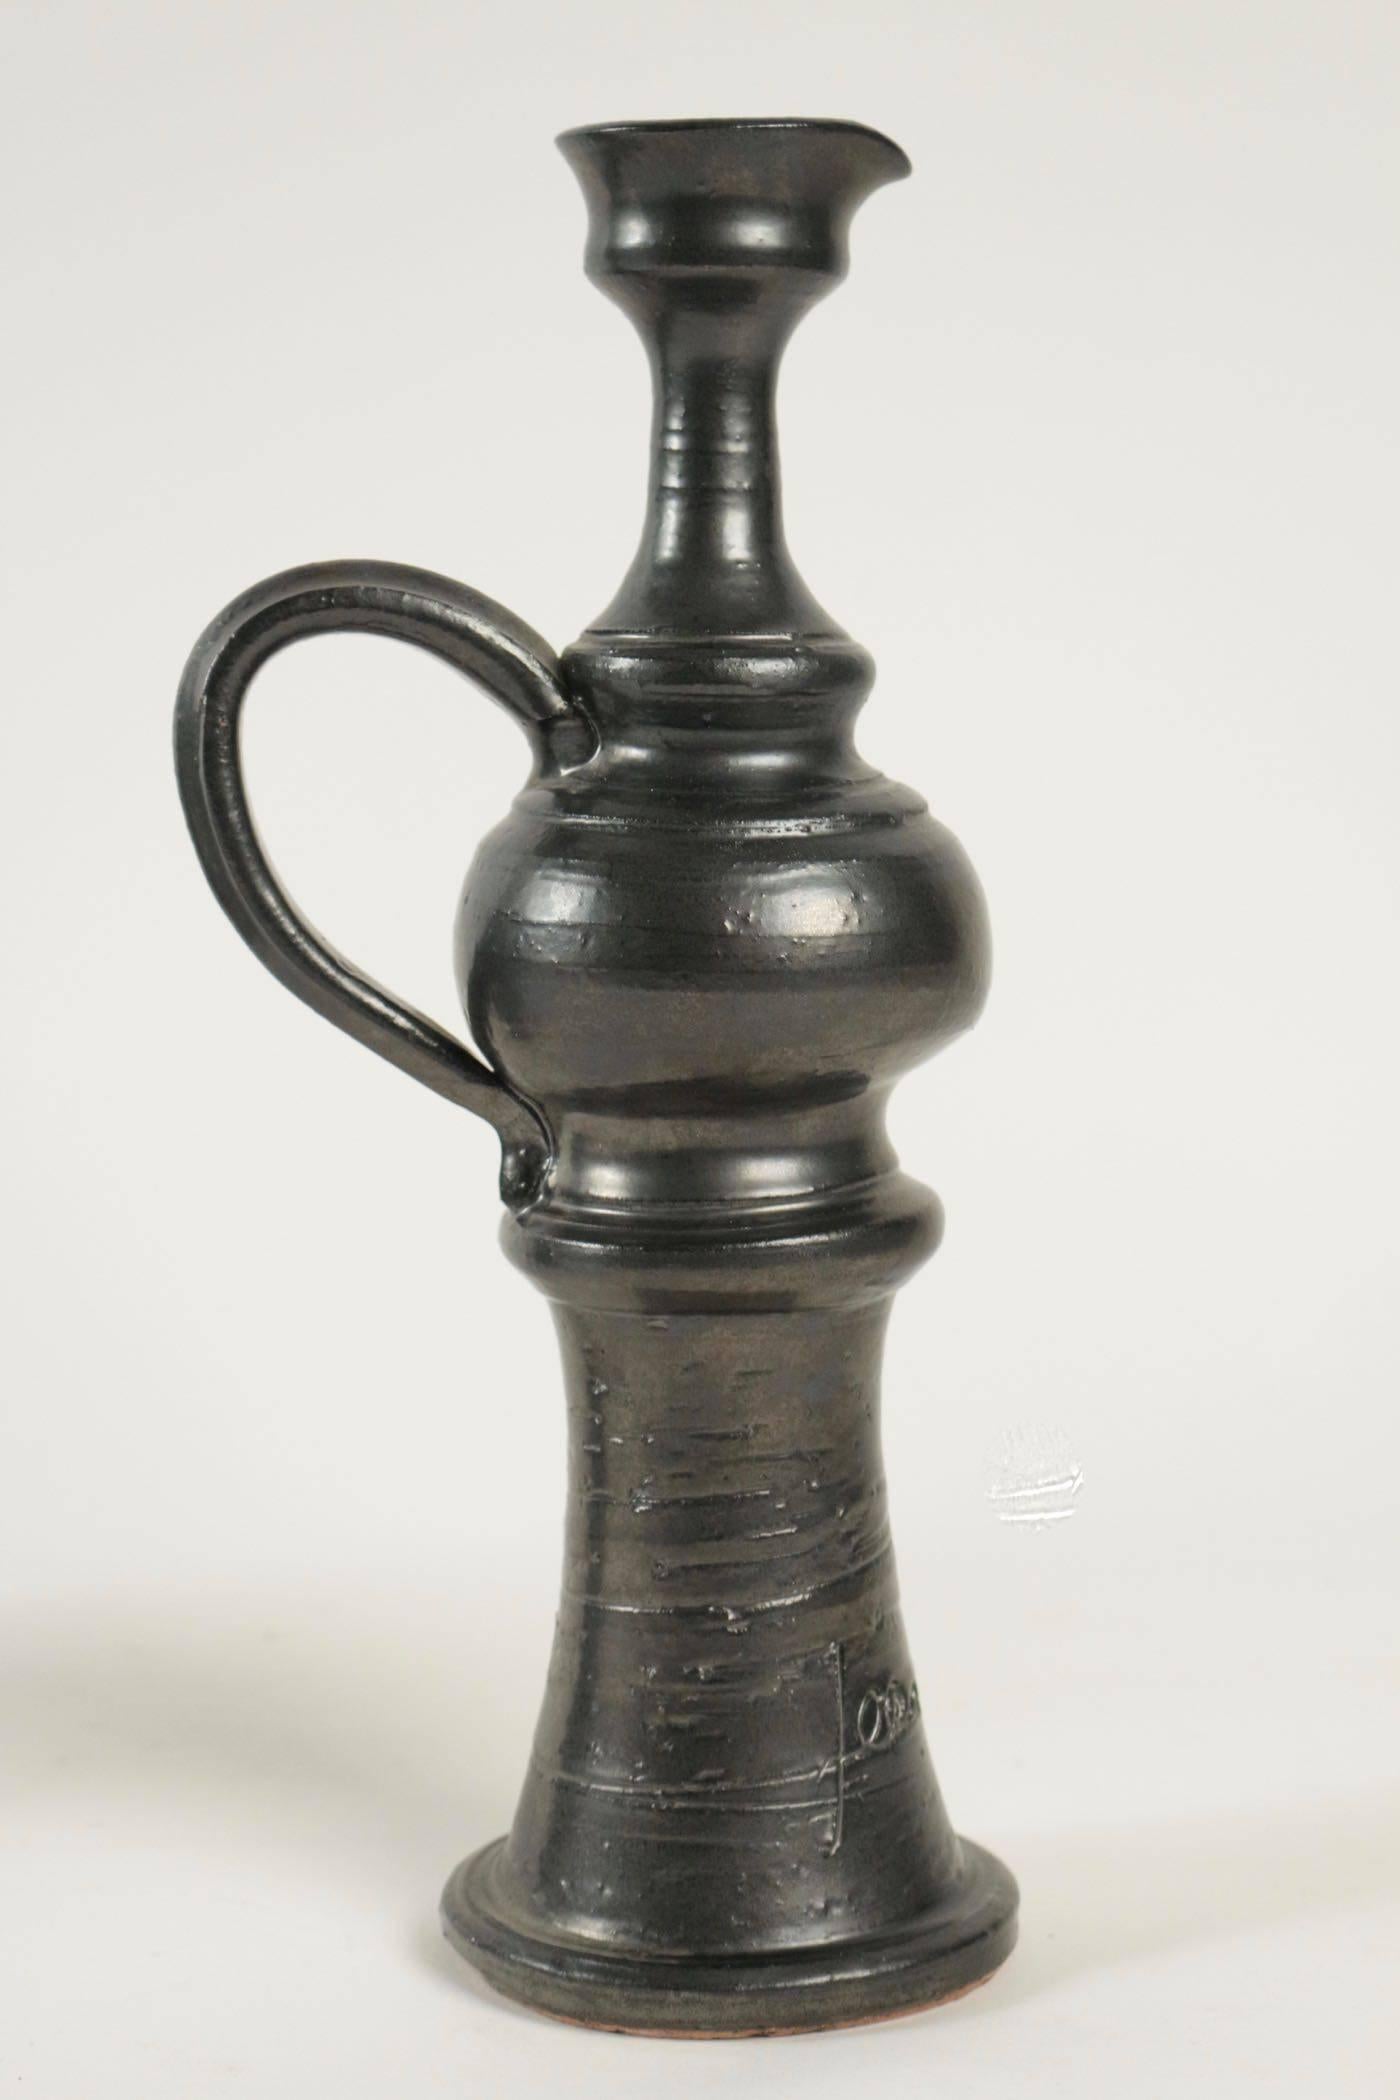 1950s Jean Marais bud vase.

Made of black enameled ceramic.

Engraved signature: Jean Marais.